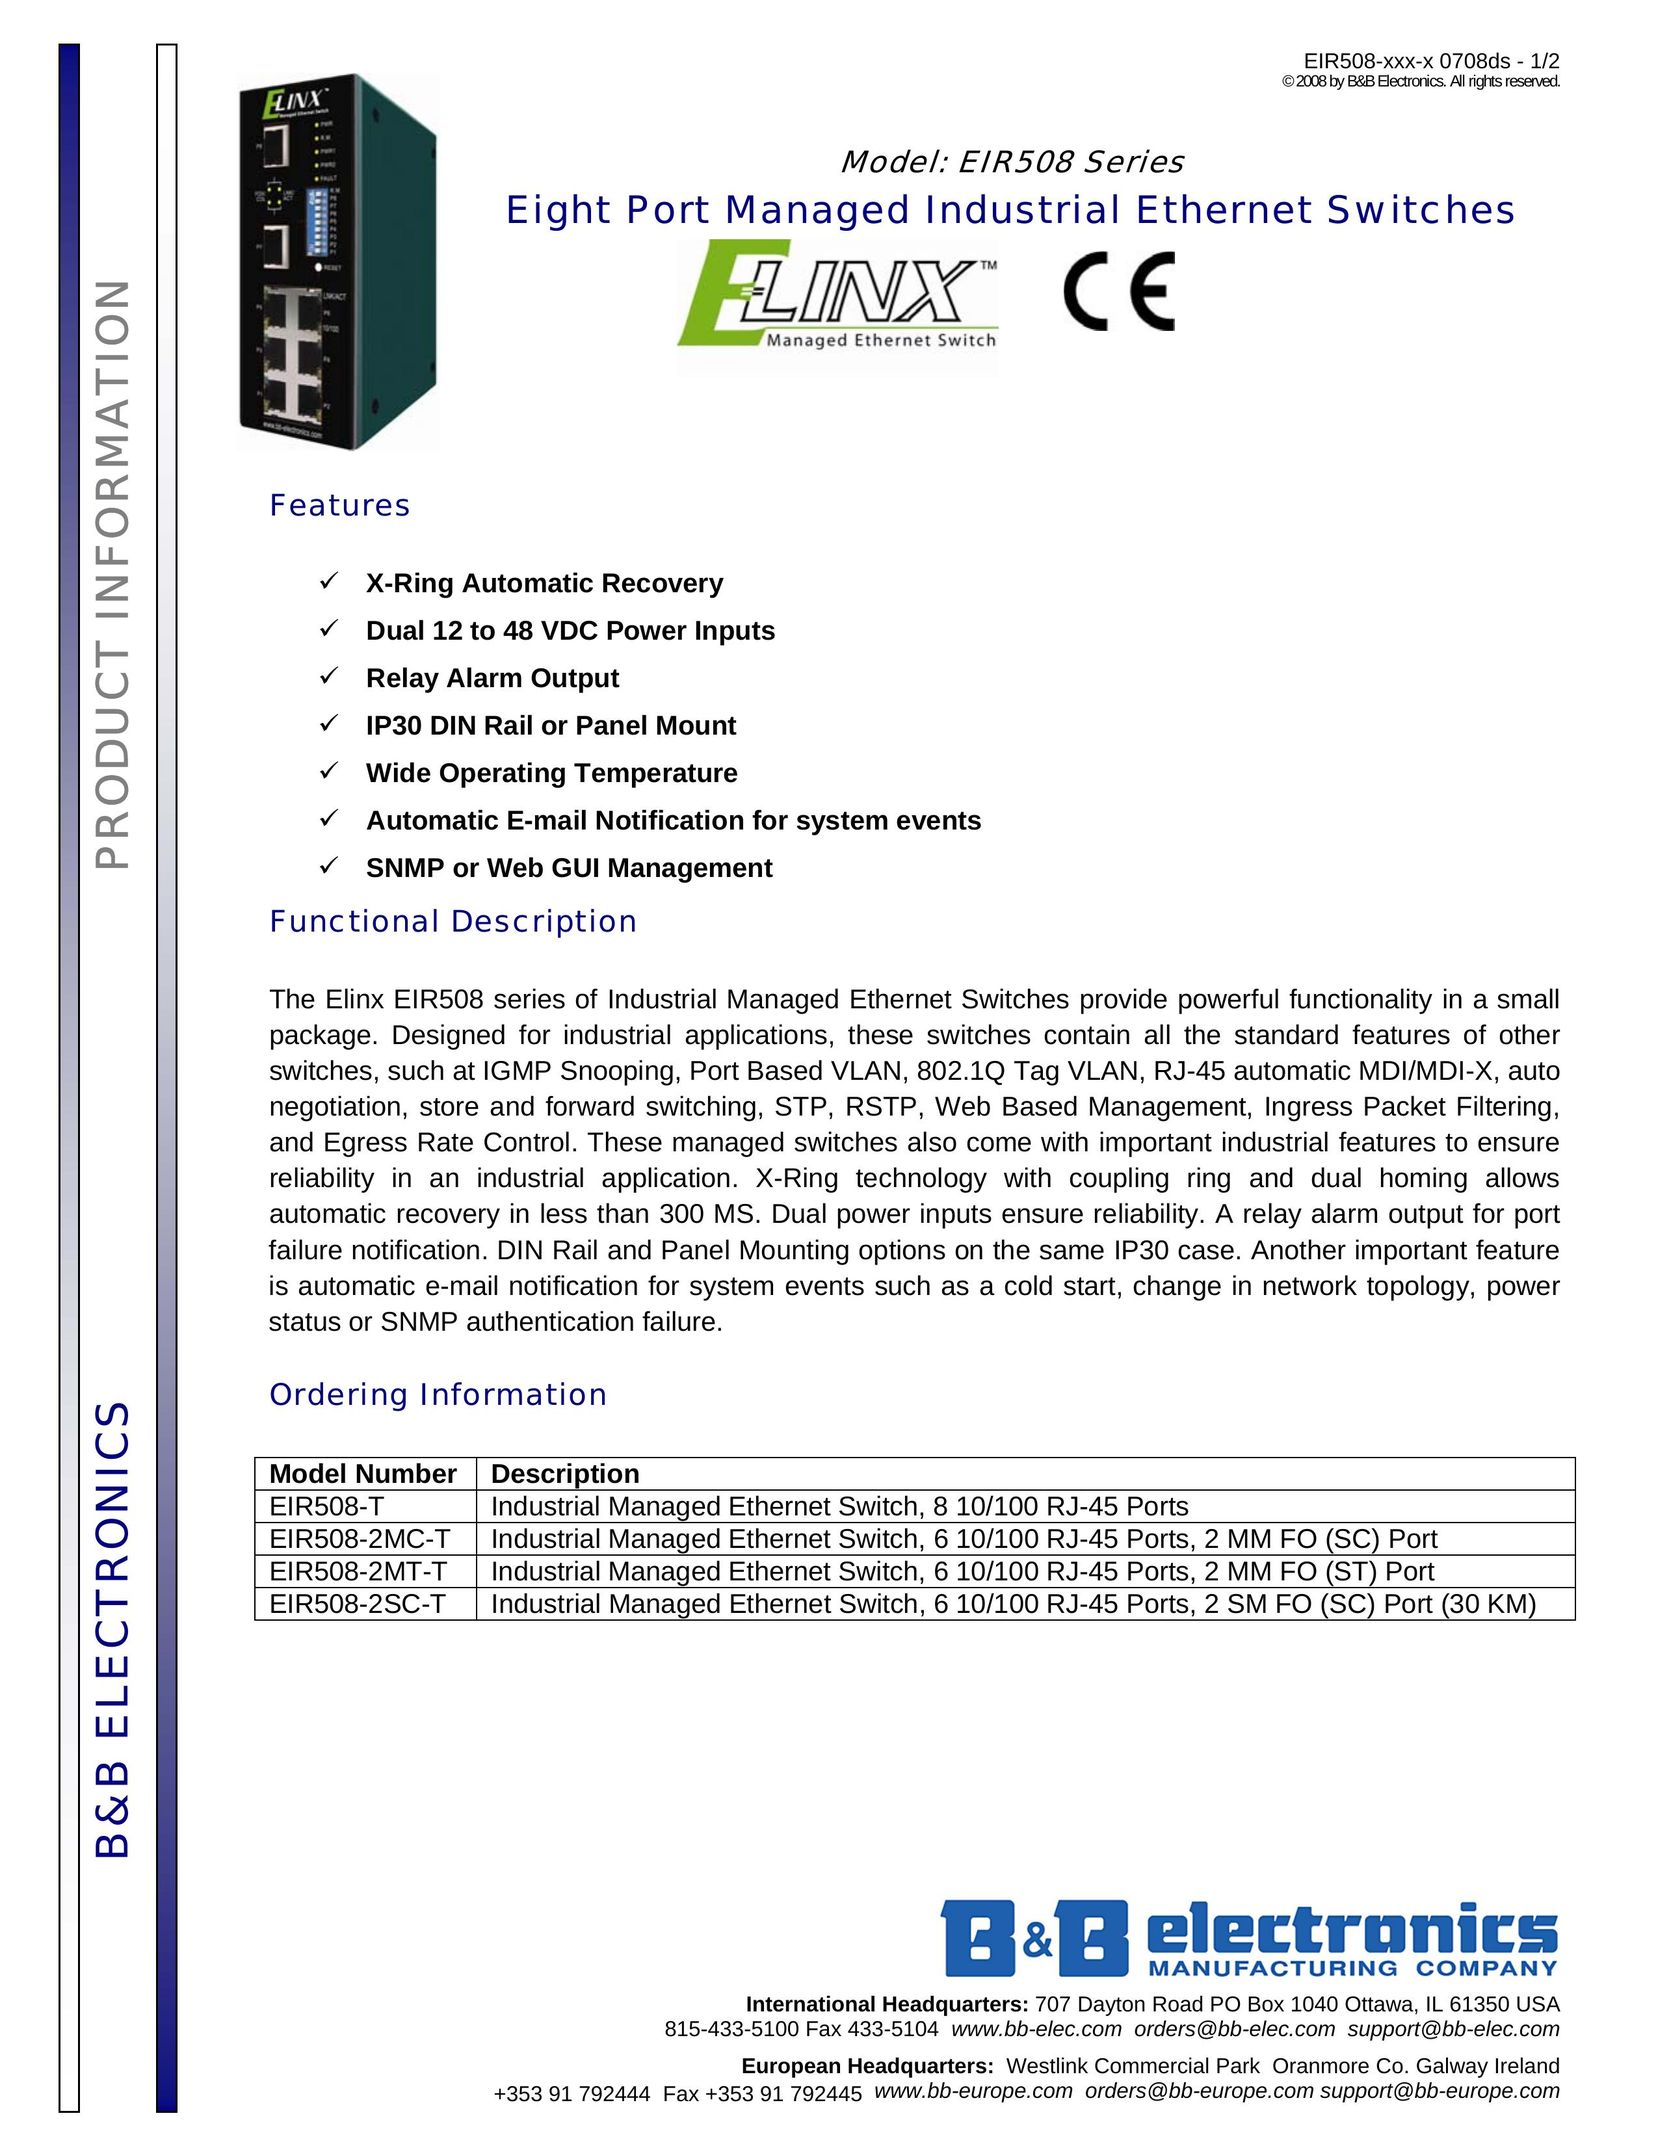 B&B Electronics EIR508-2MT-T Switch User Manual